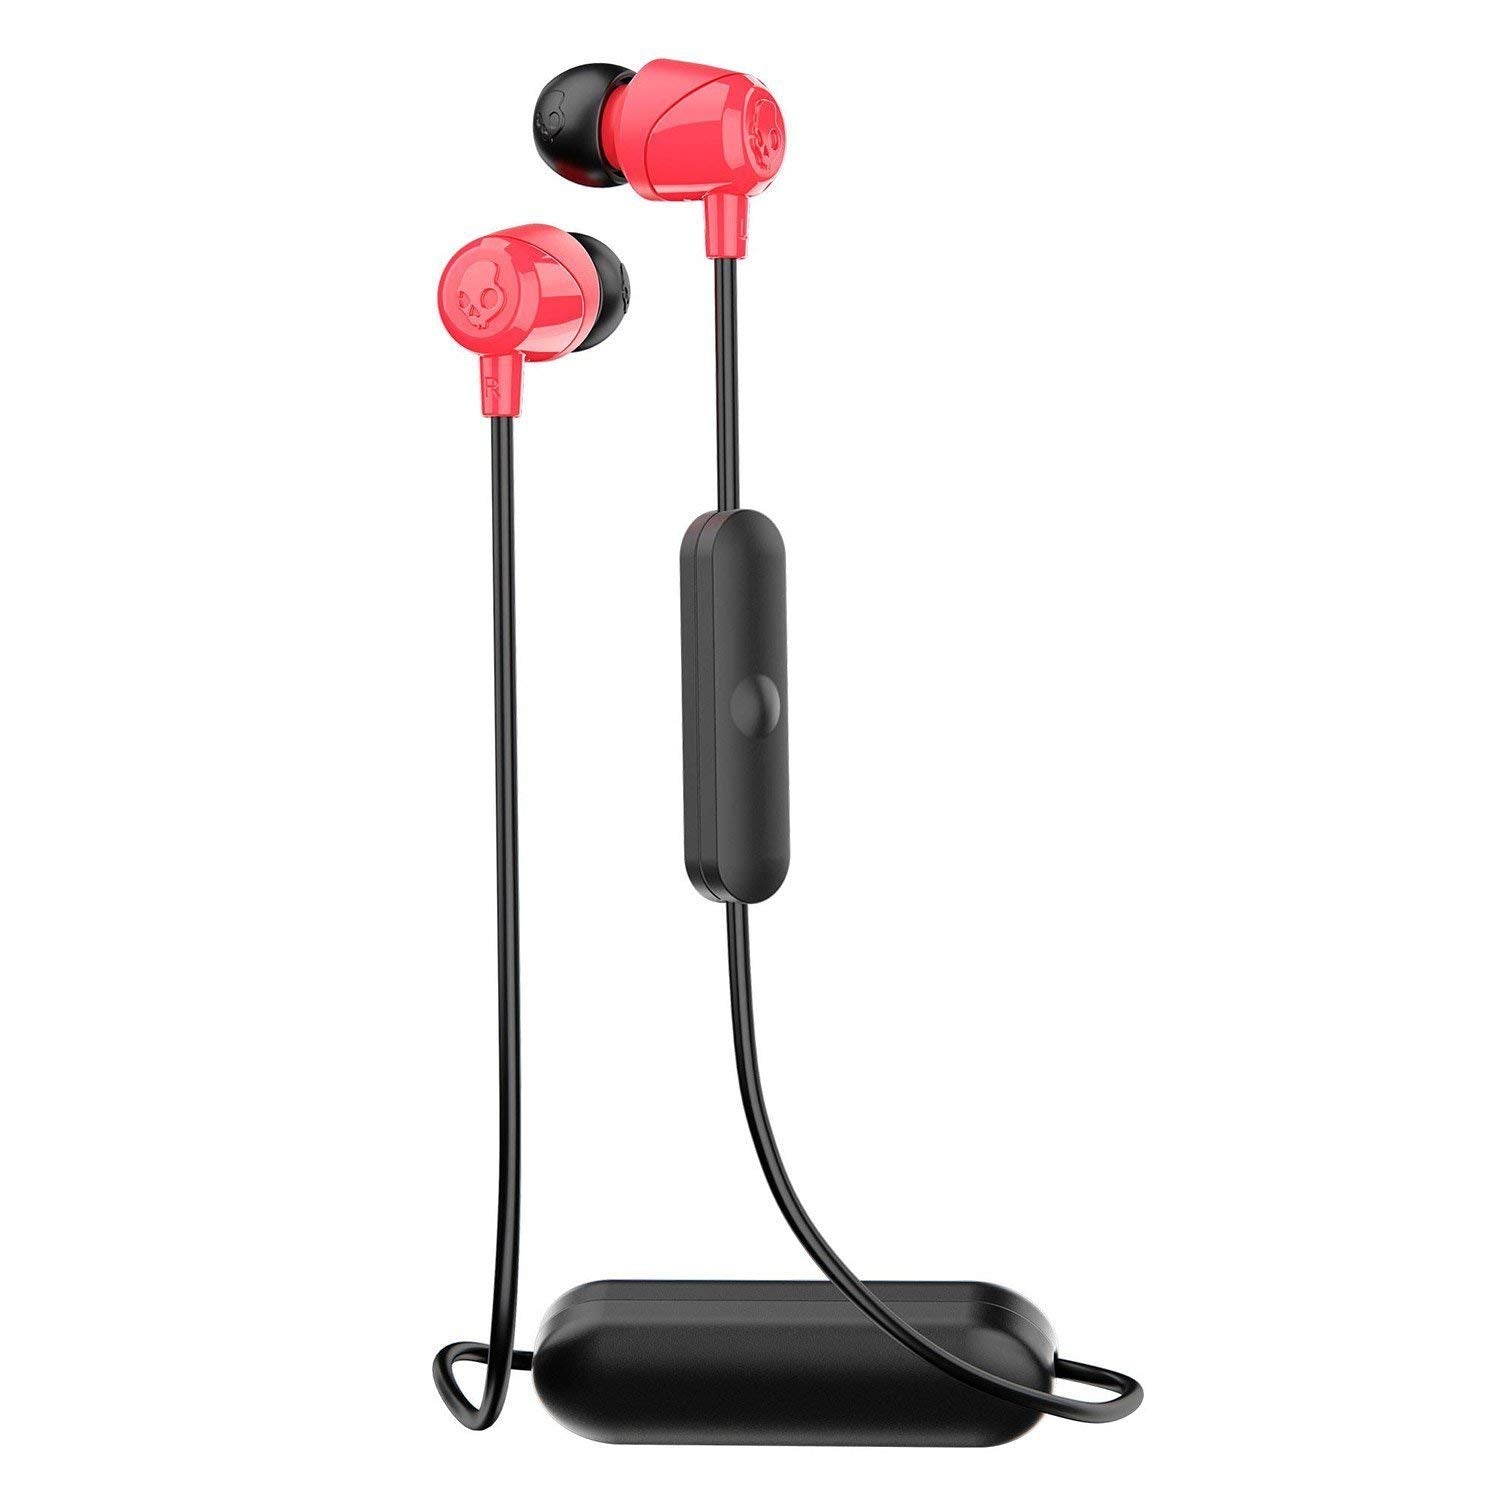 Skullcandy S2DUW-K010 Jib Bluetooth Wireless Earbuds Earphones with Microphone, Red/Black